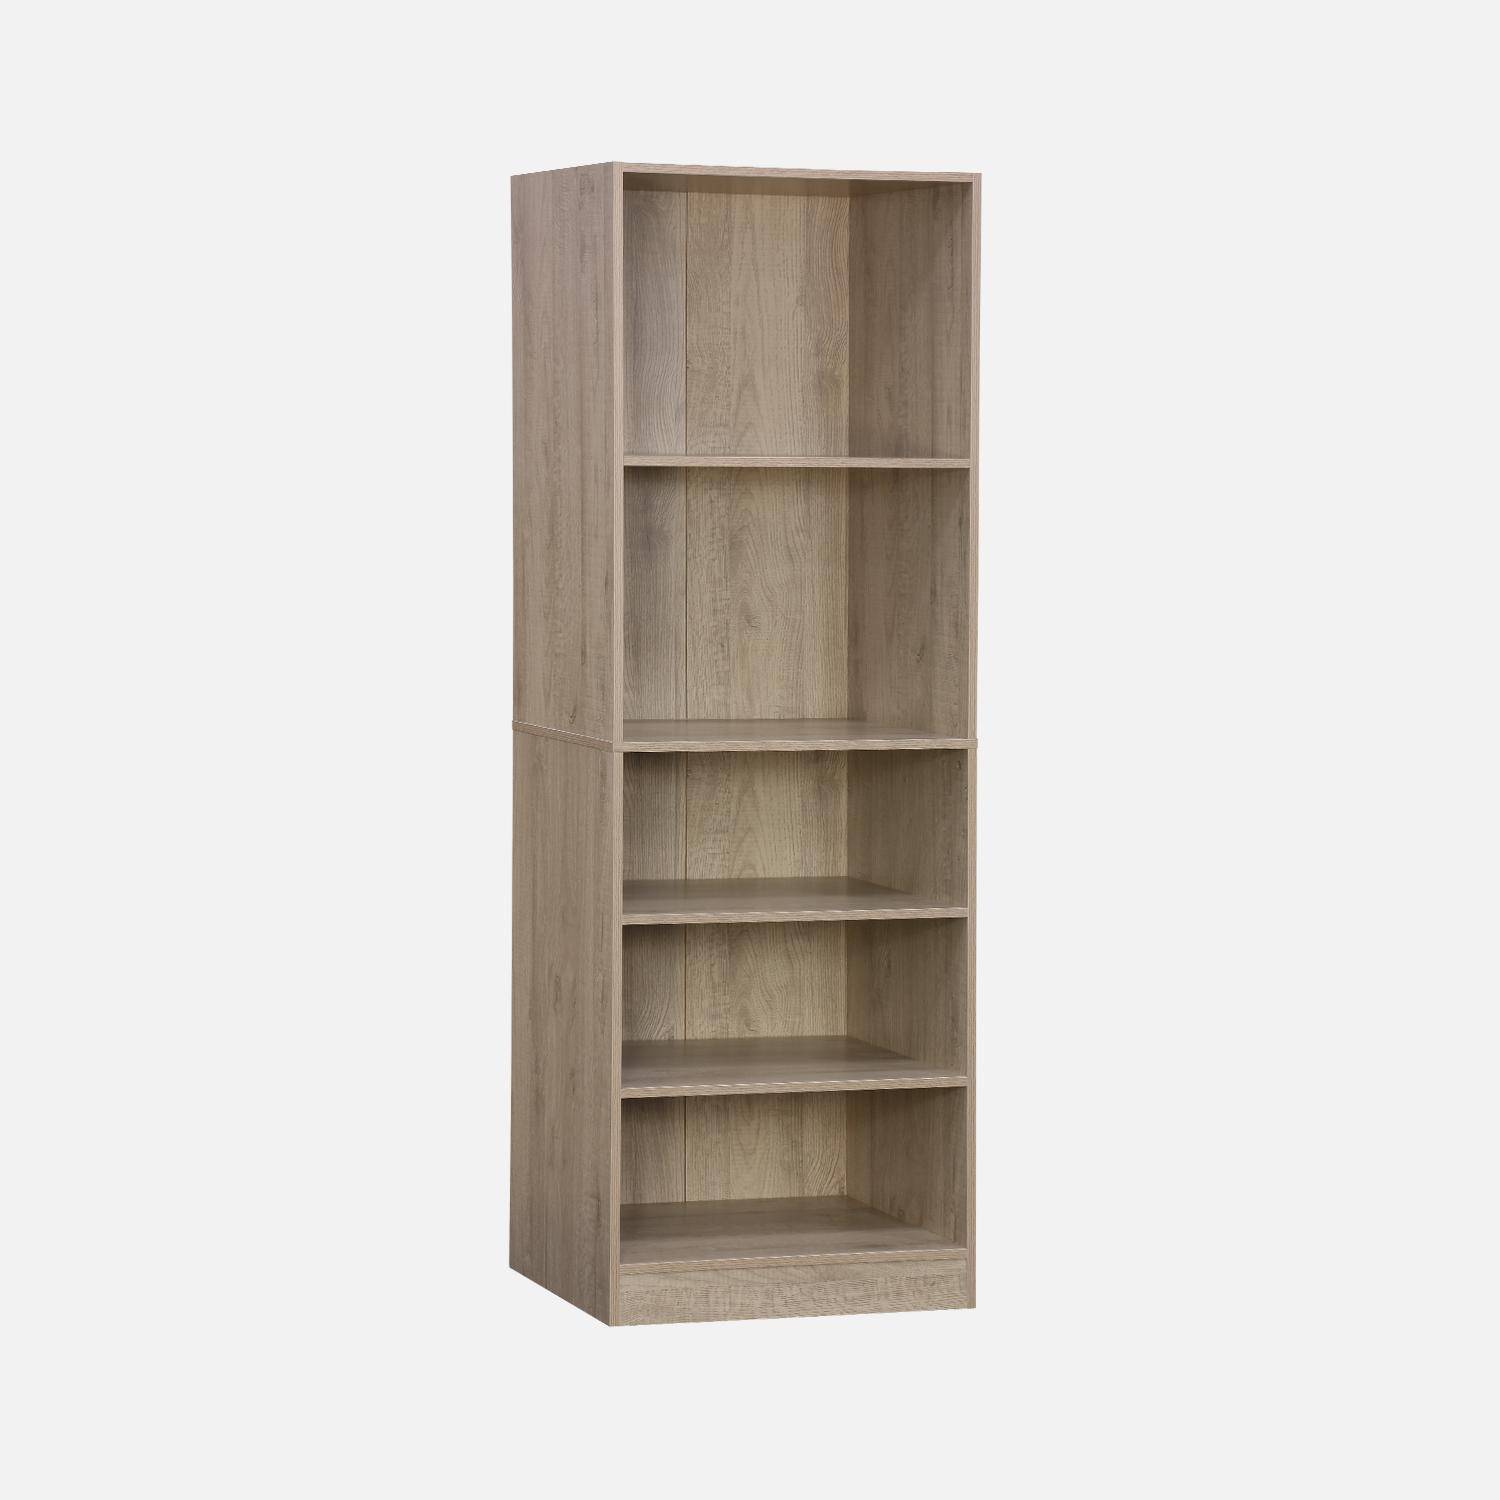 Modular open wardrobe shelf unit, 60x45x180cm, Modulo, 5 shelves, Natural Photo3